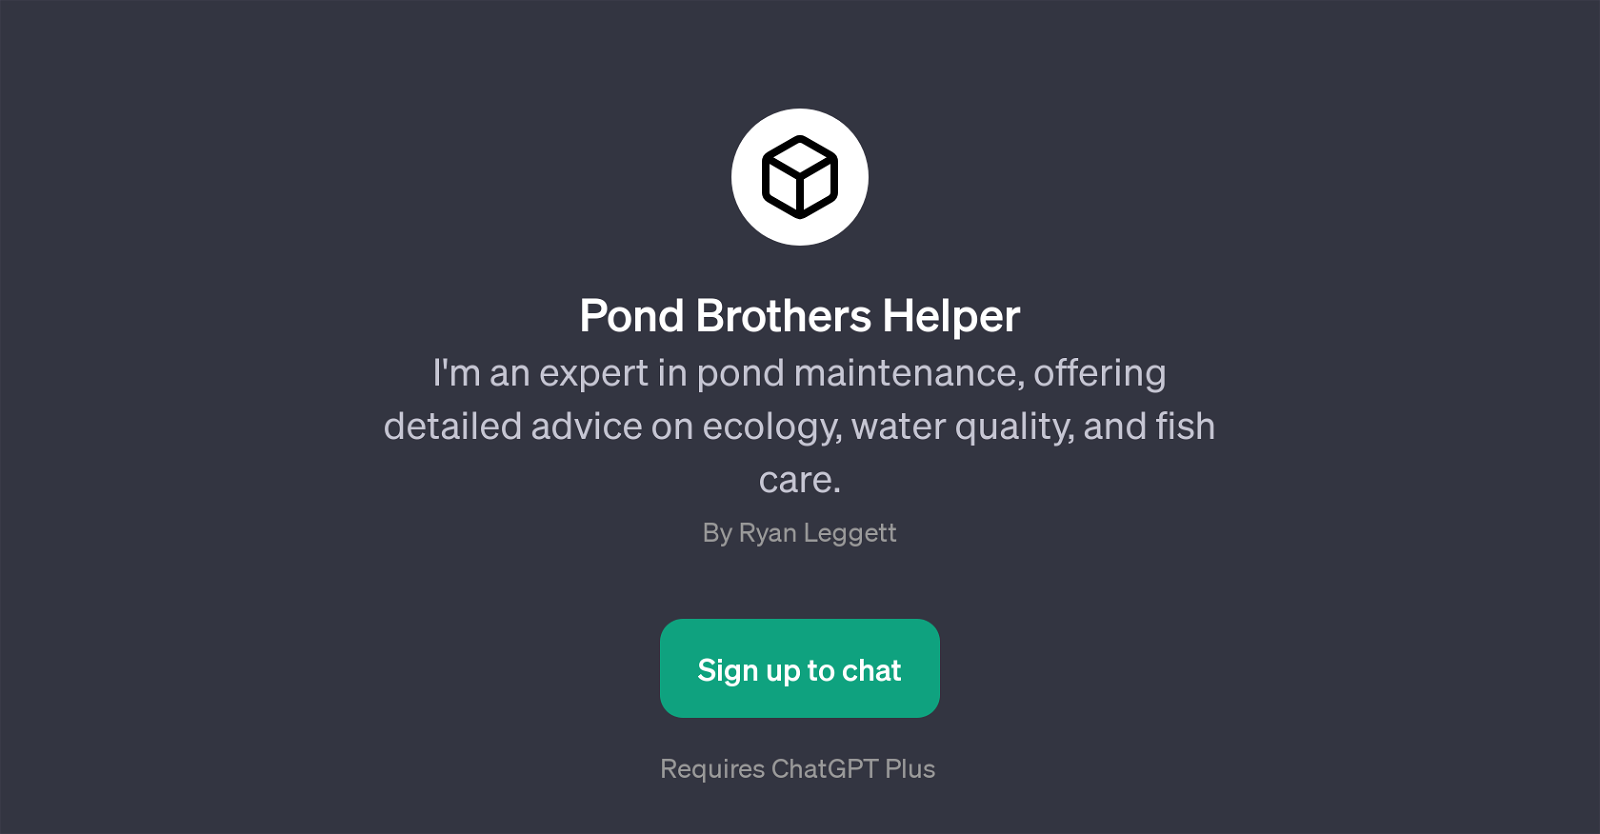 Pond Brothers Helper website